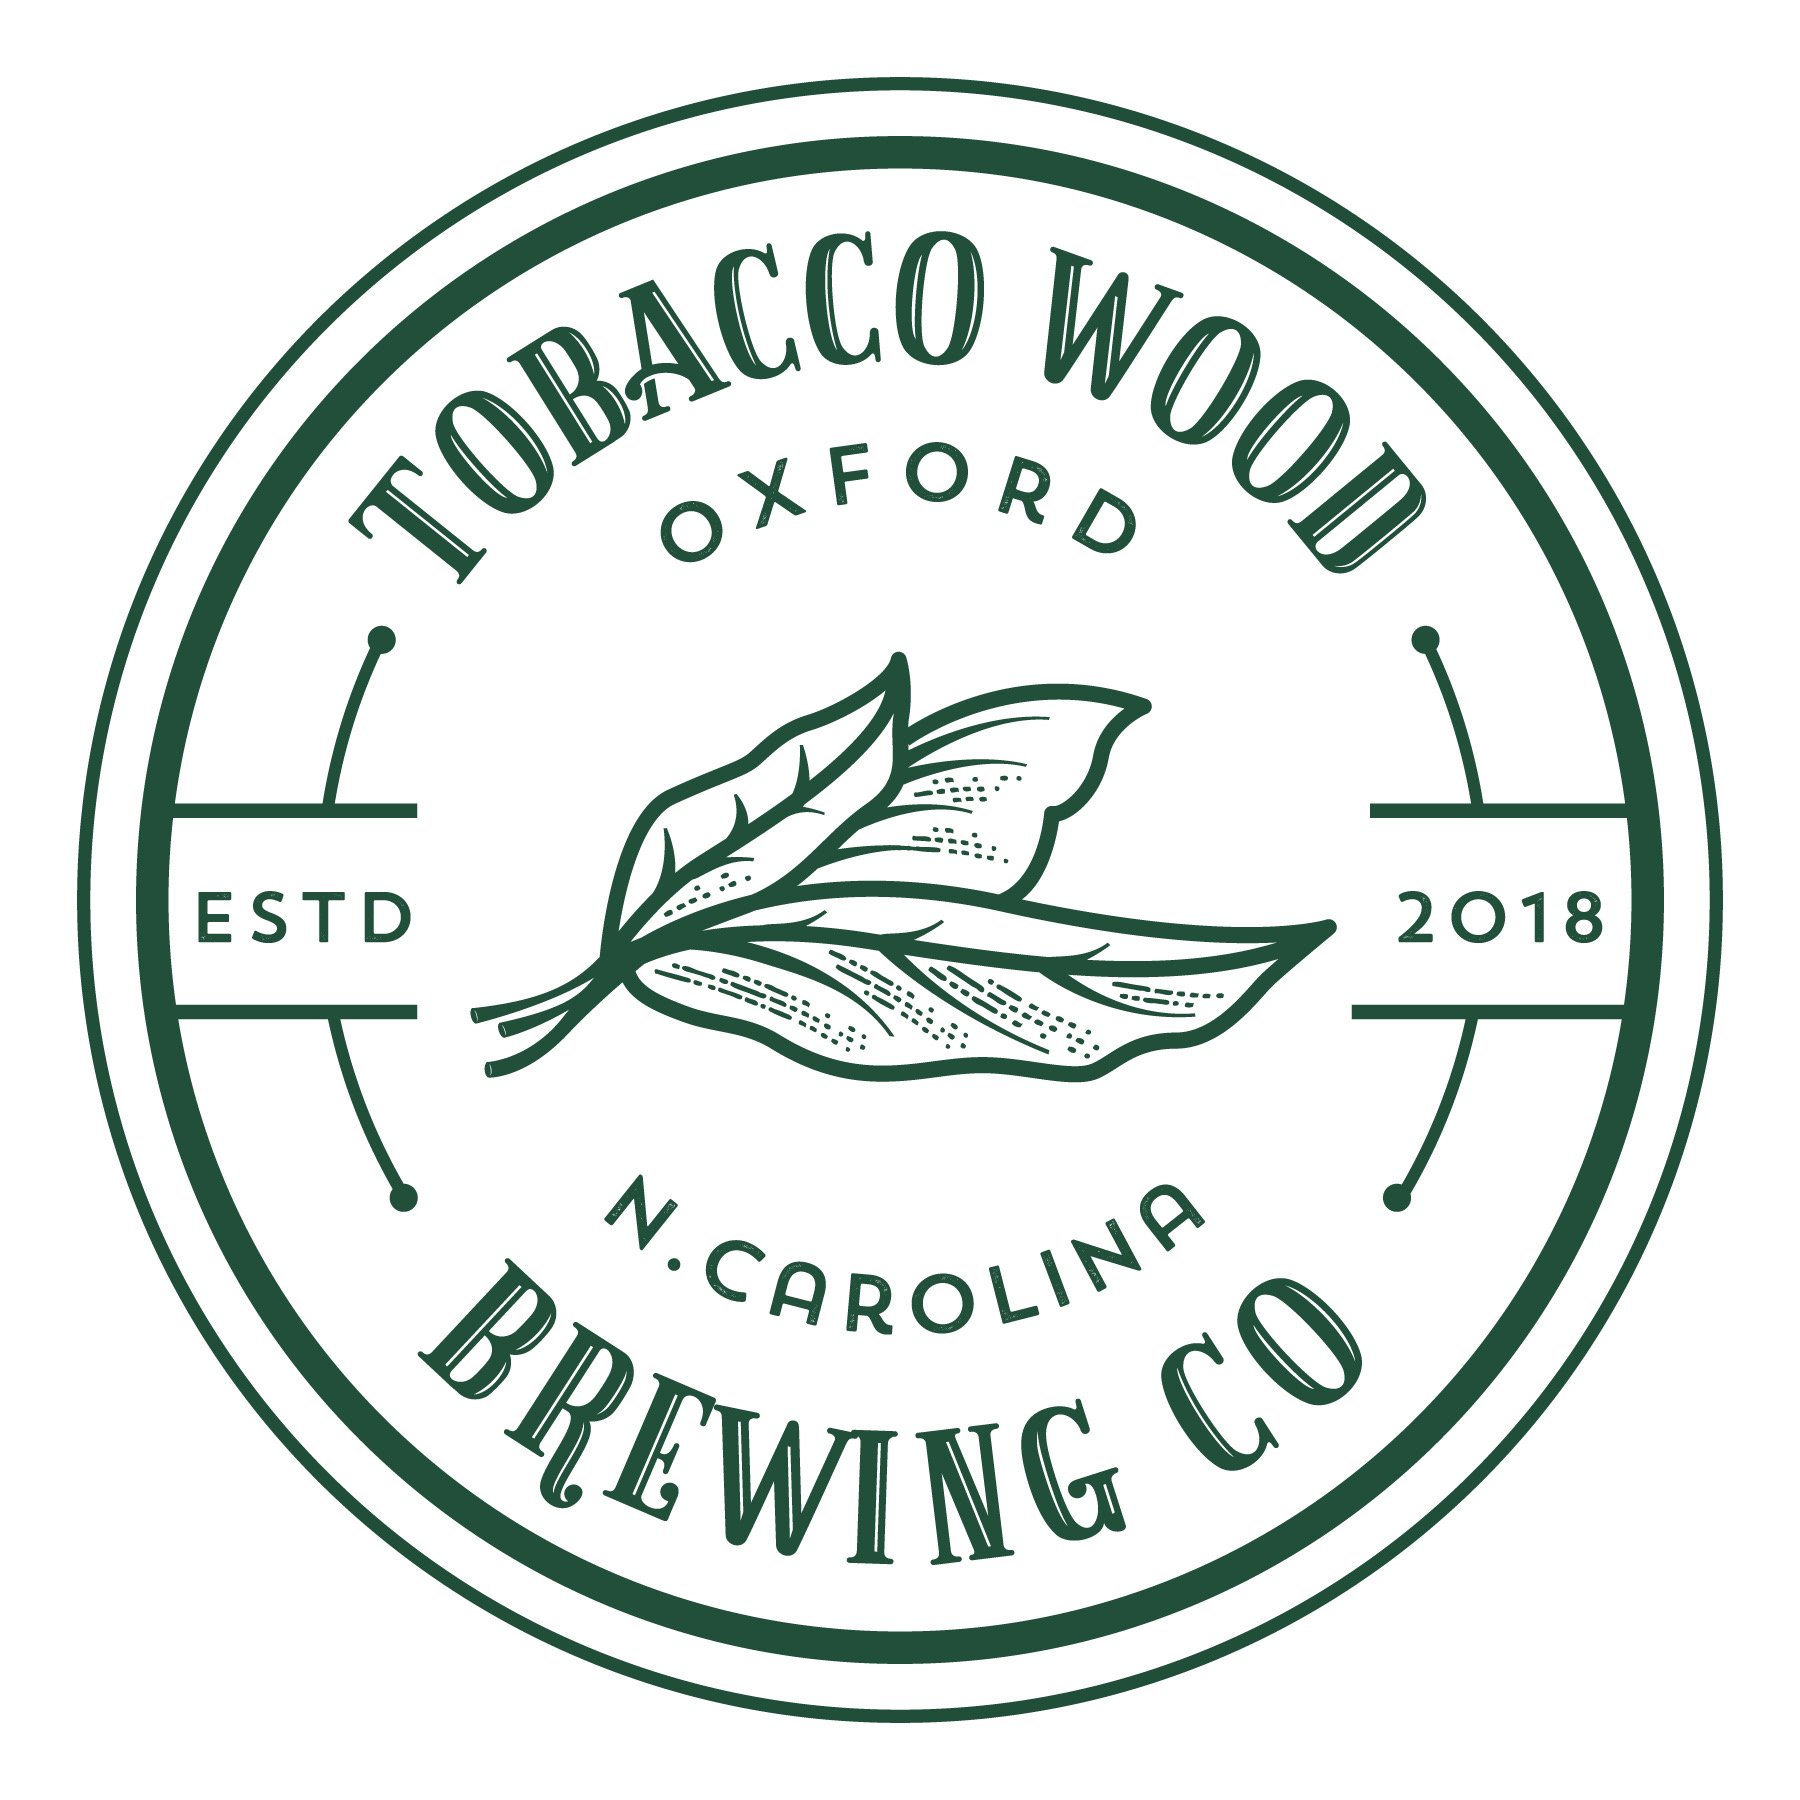 Tobacco Wood Brewing Company